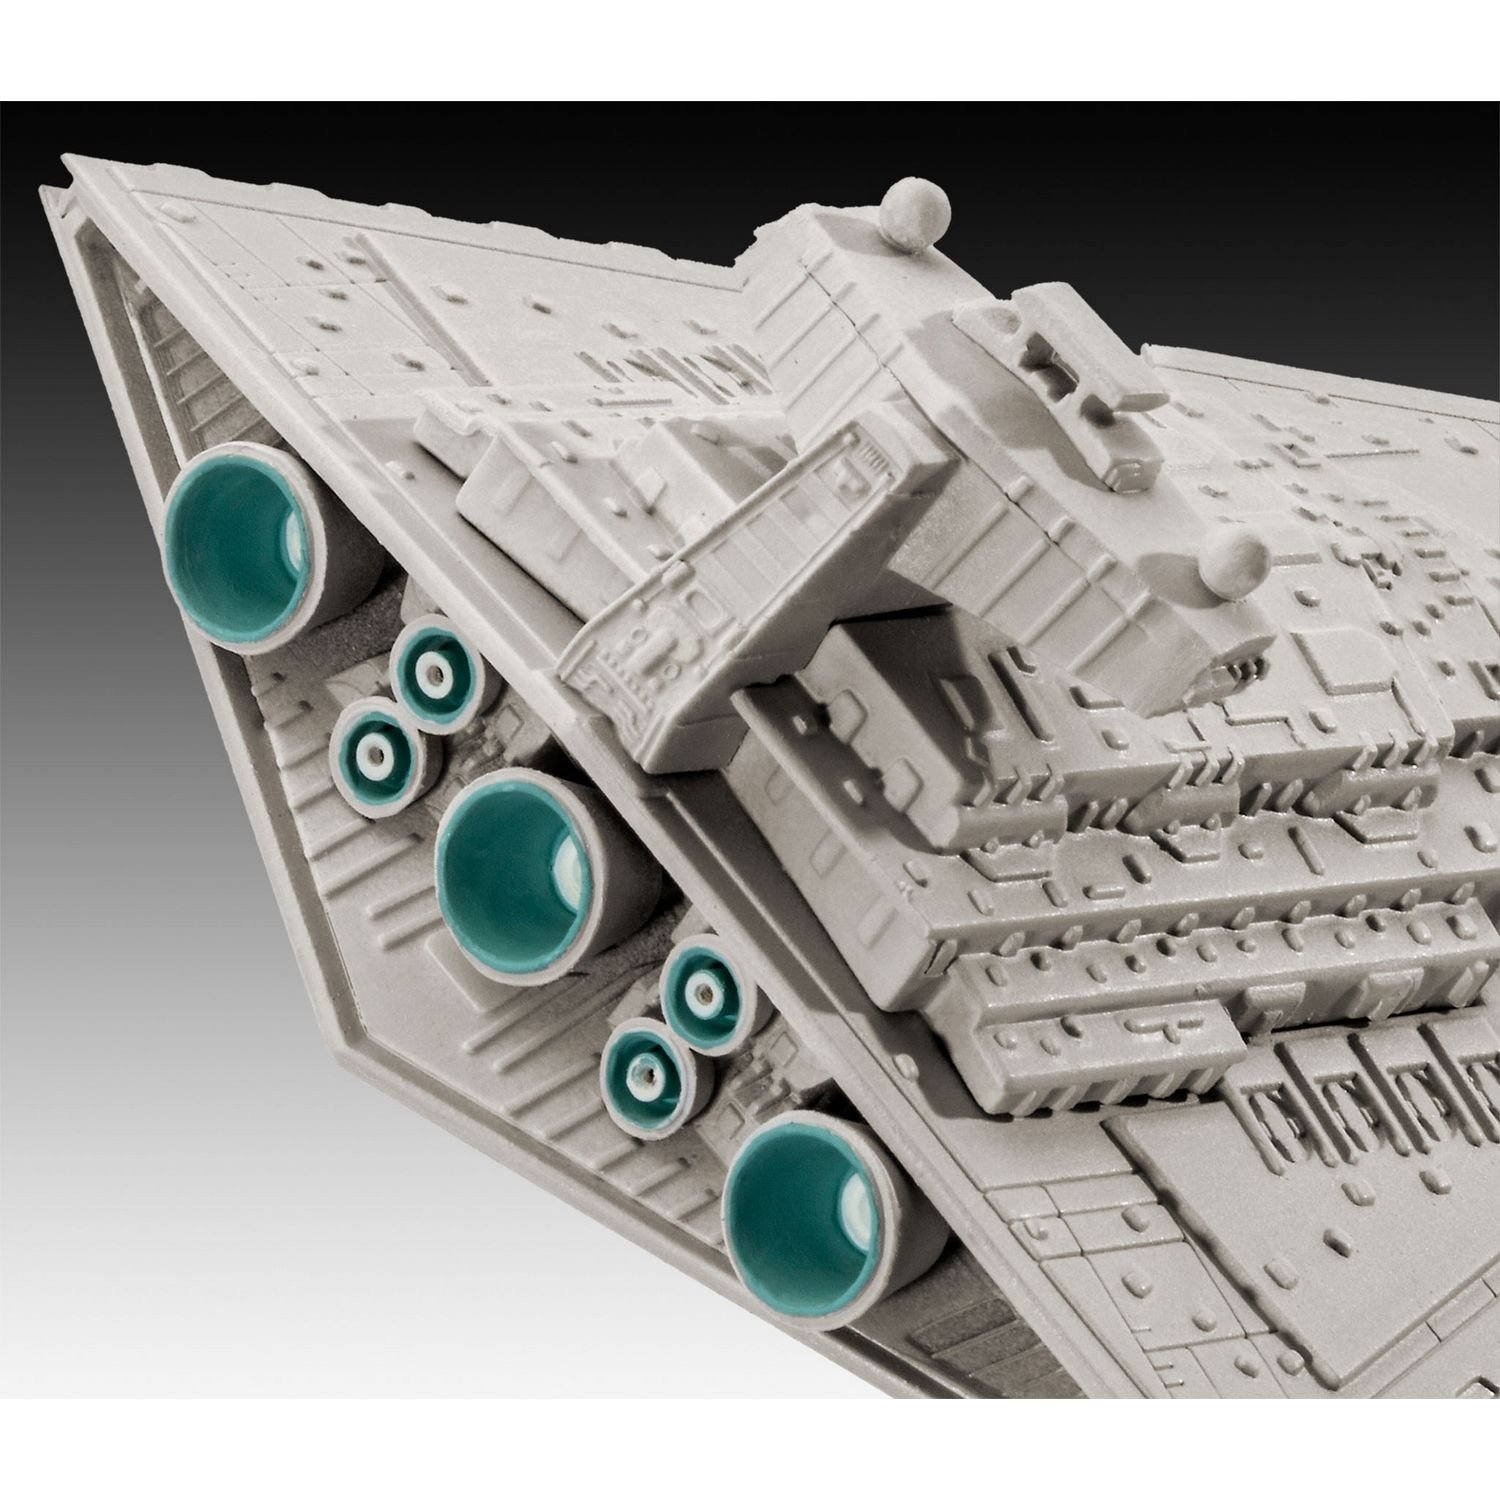 Збірна модель Revell Космічний корабель Imperial Star Destroyer, рівень 3, масштаб 1:12300, 21 деталь (RVL-03609) - фото 5